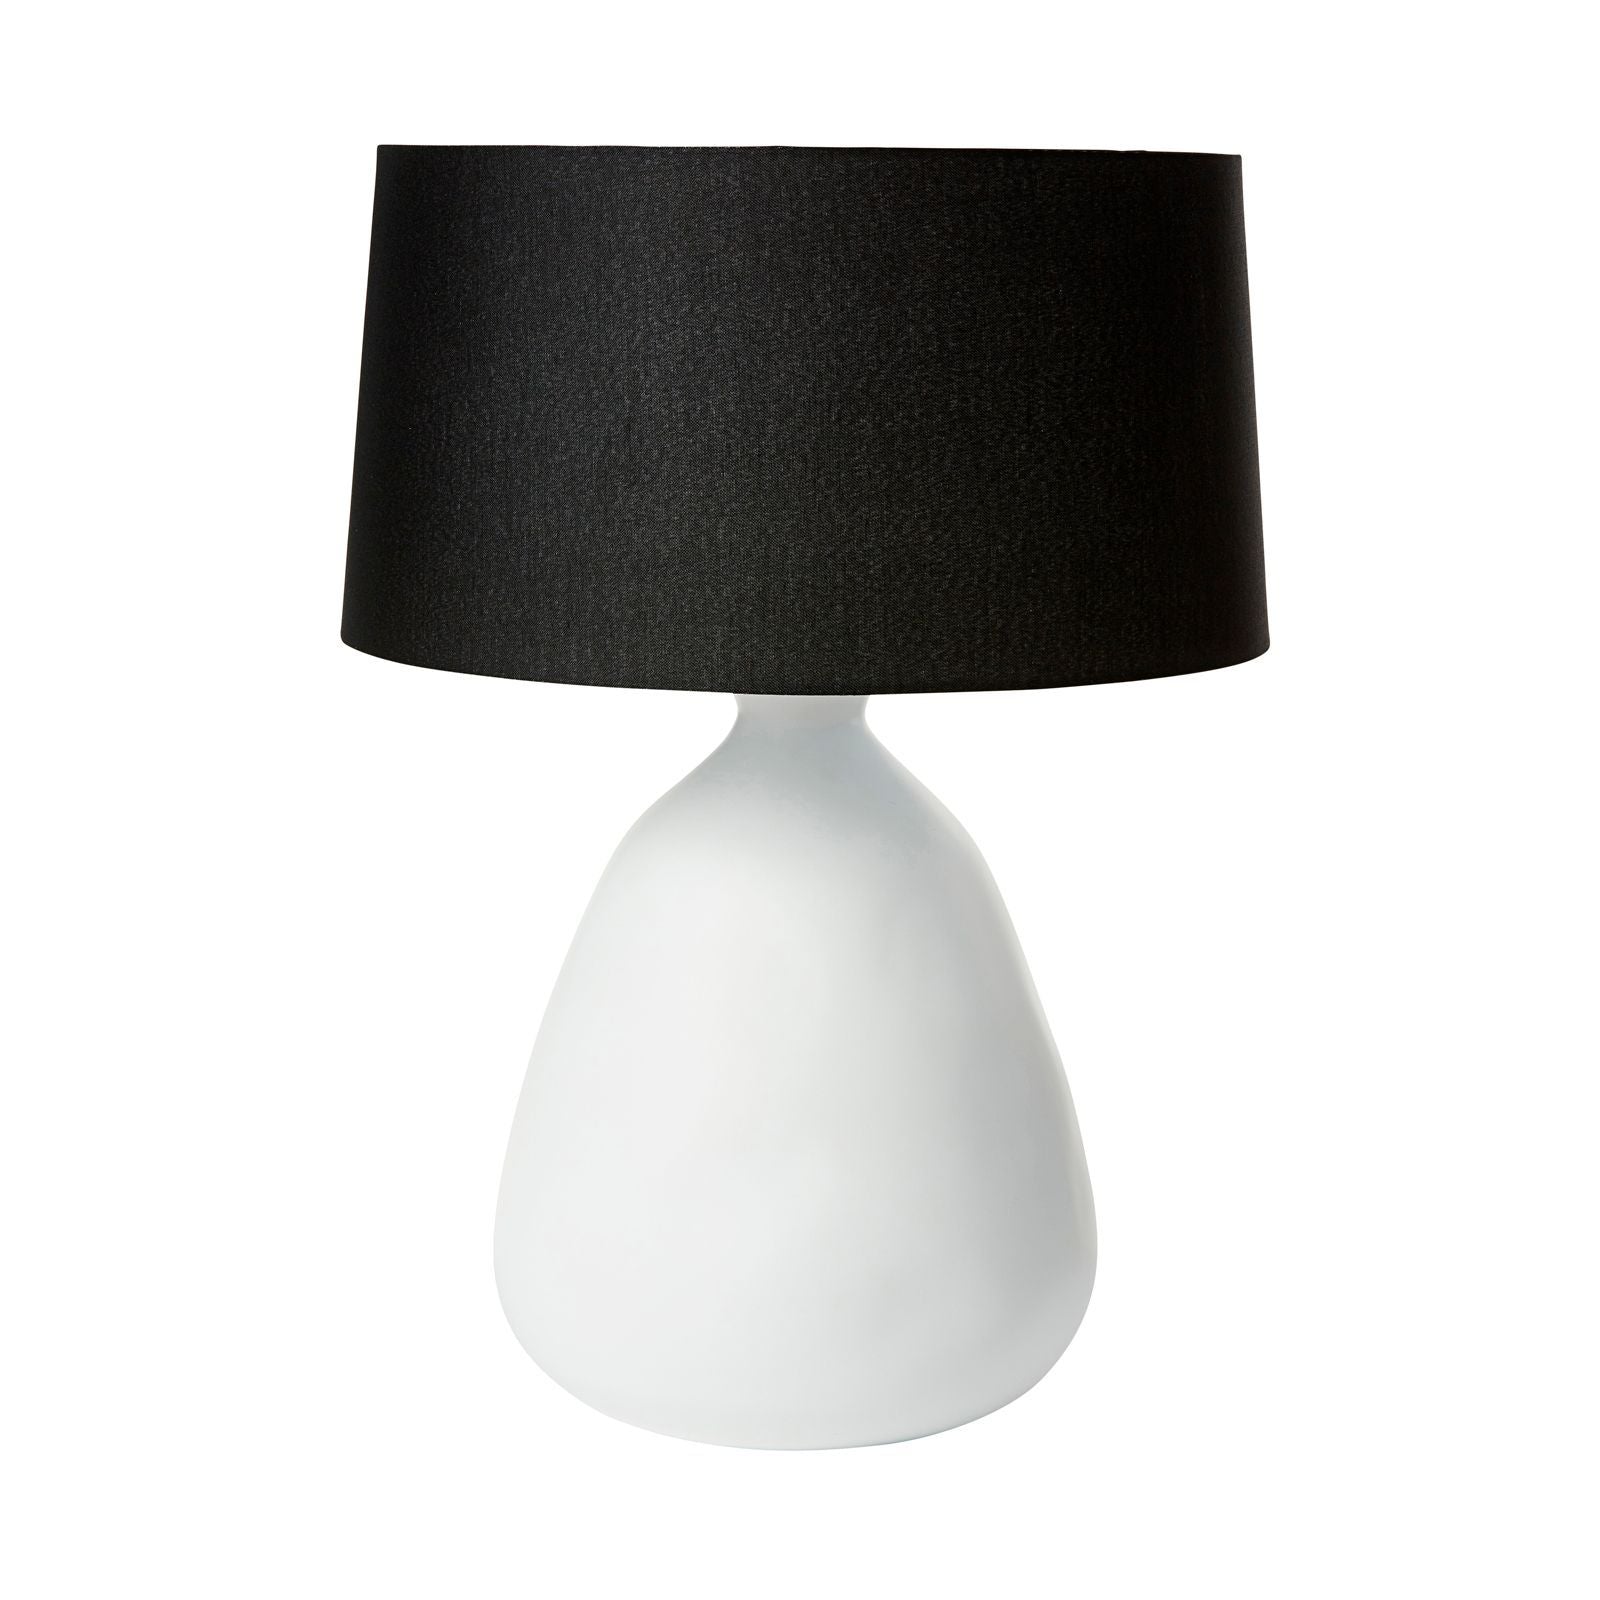 Organic Lamp with Black Shade